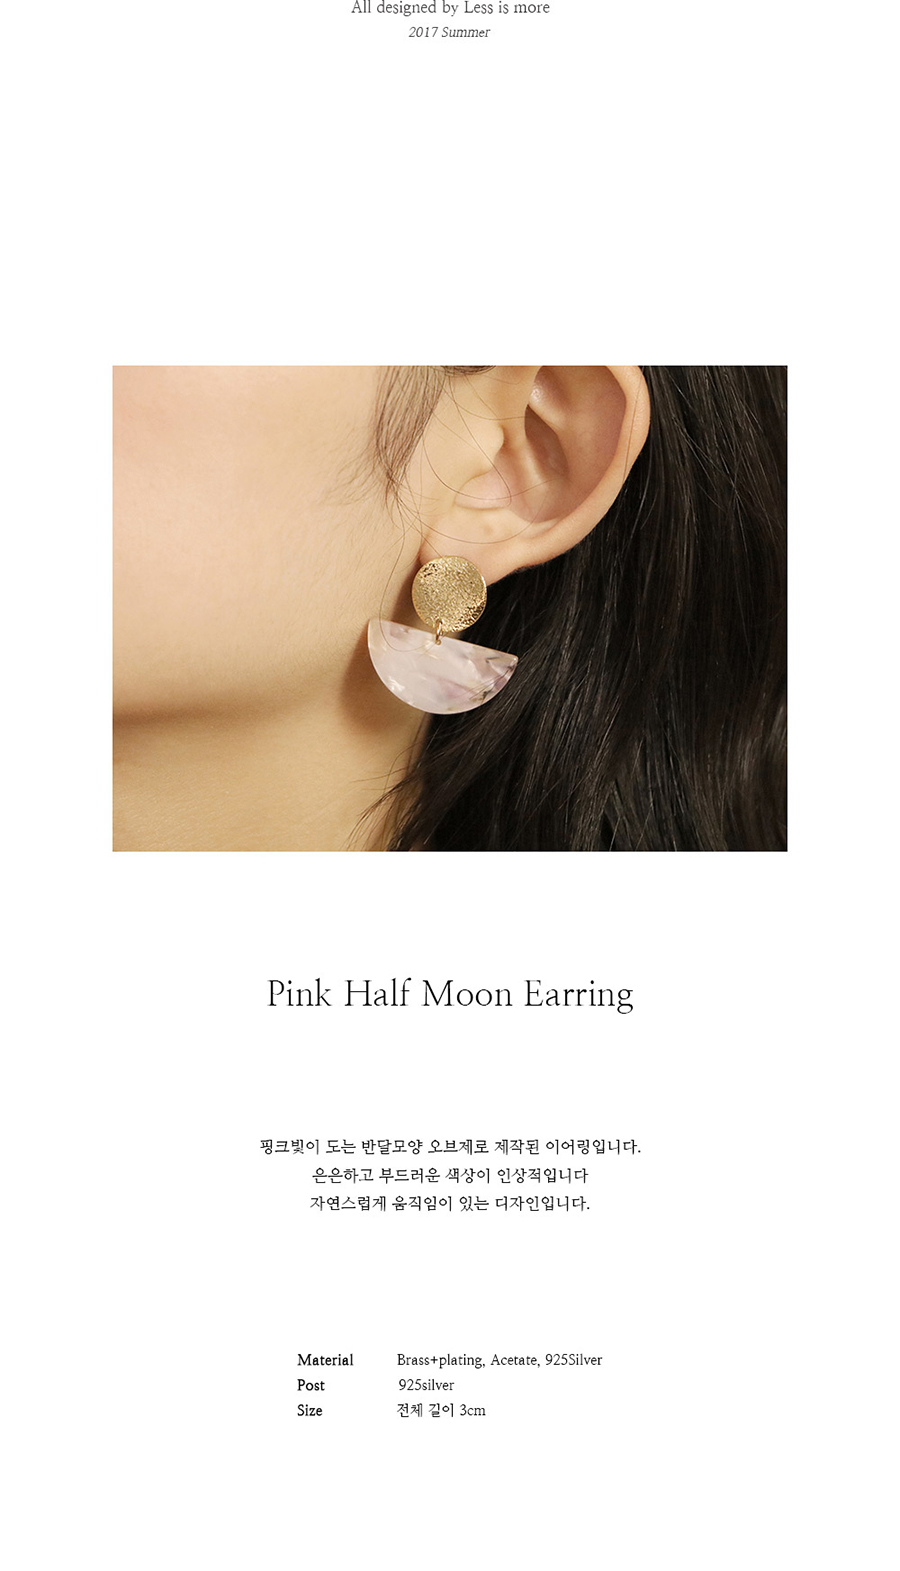 pink half moon earring 24,000원 - 레스이즈모어 이동요망, X주얼리/시계, 귀걸이, 진주/원석 바보사랑 pink half moon earring 24,000원 - 레스이즈모어 이동요망, X주얼리/시계, 귀걸이, 진주/원석 바보사랑